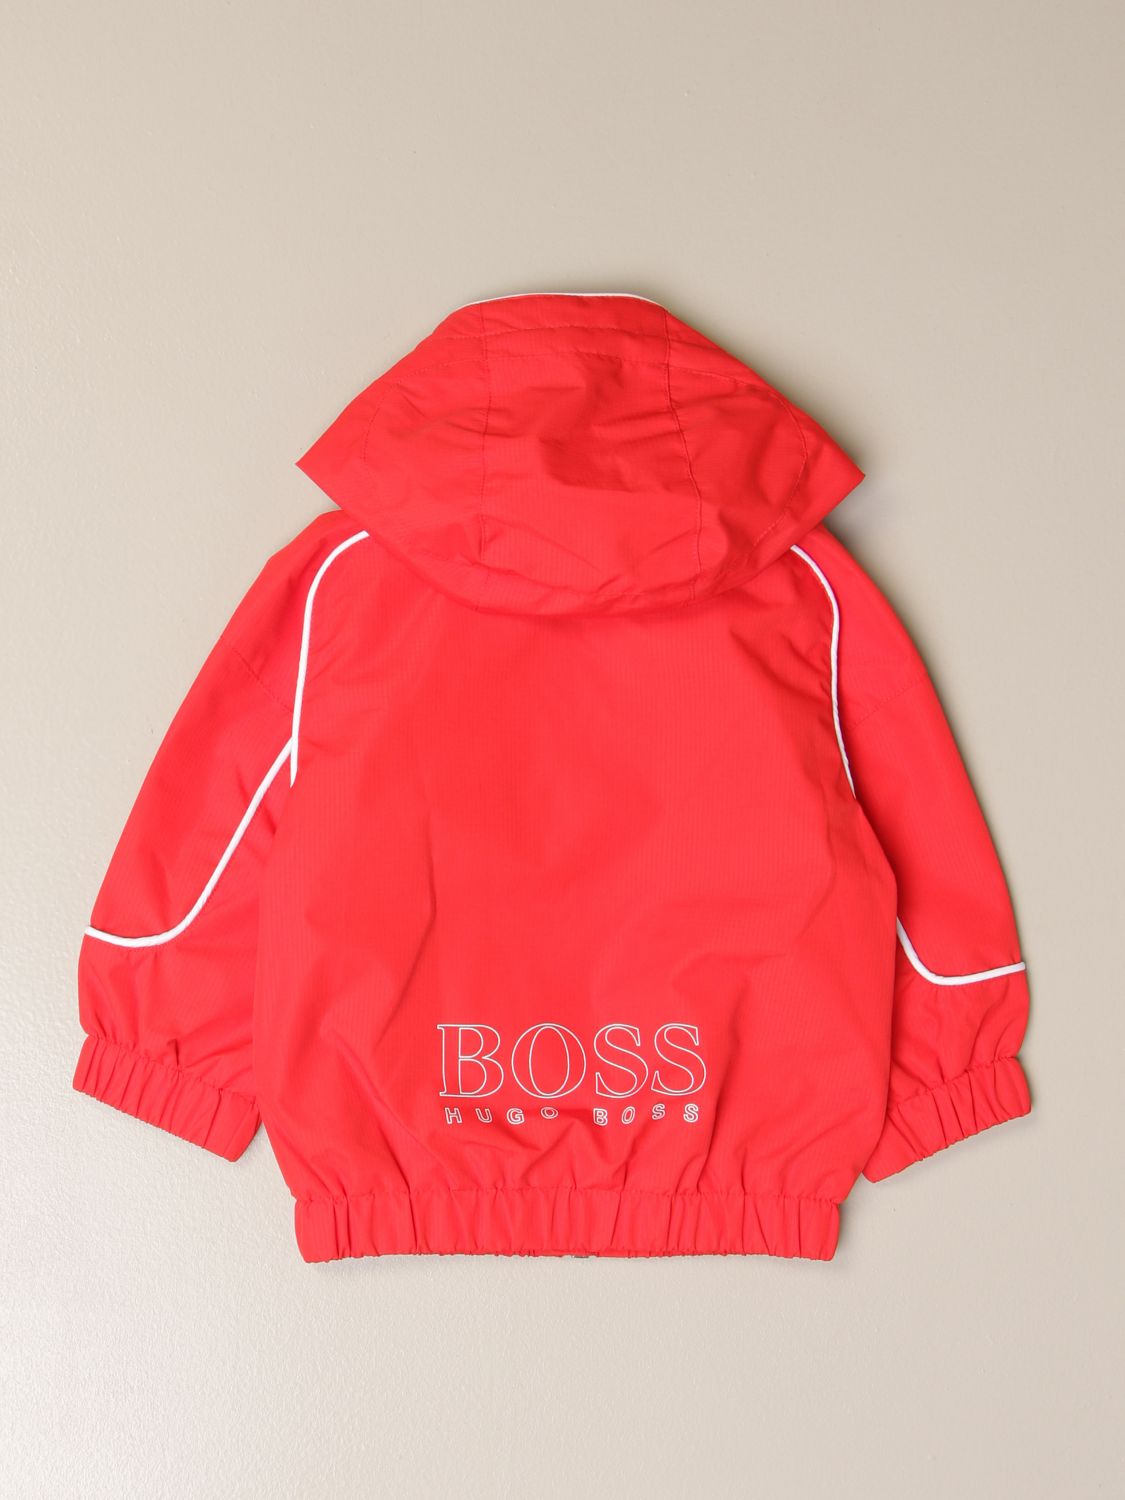 hugo boss sport jacket